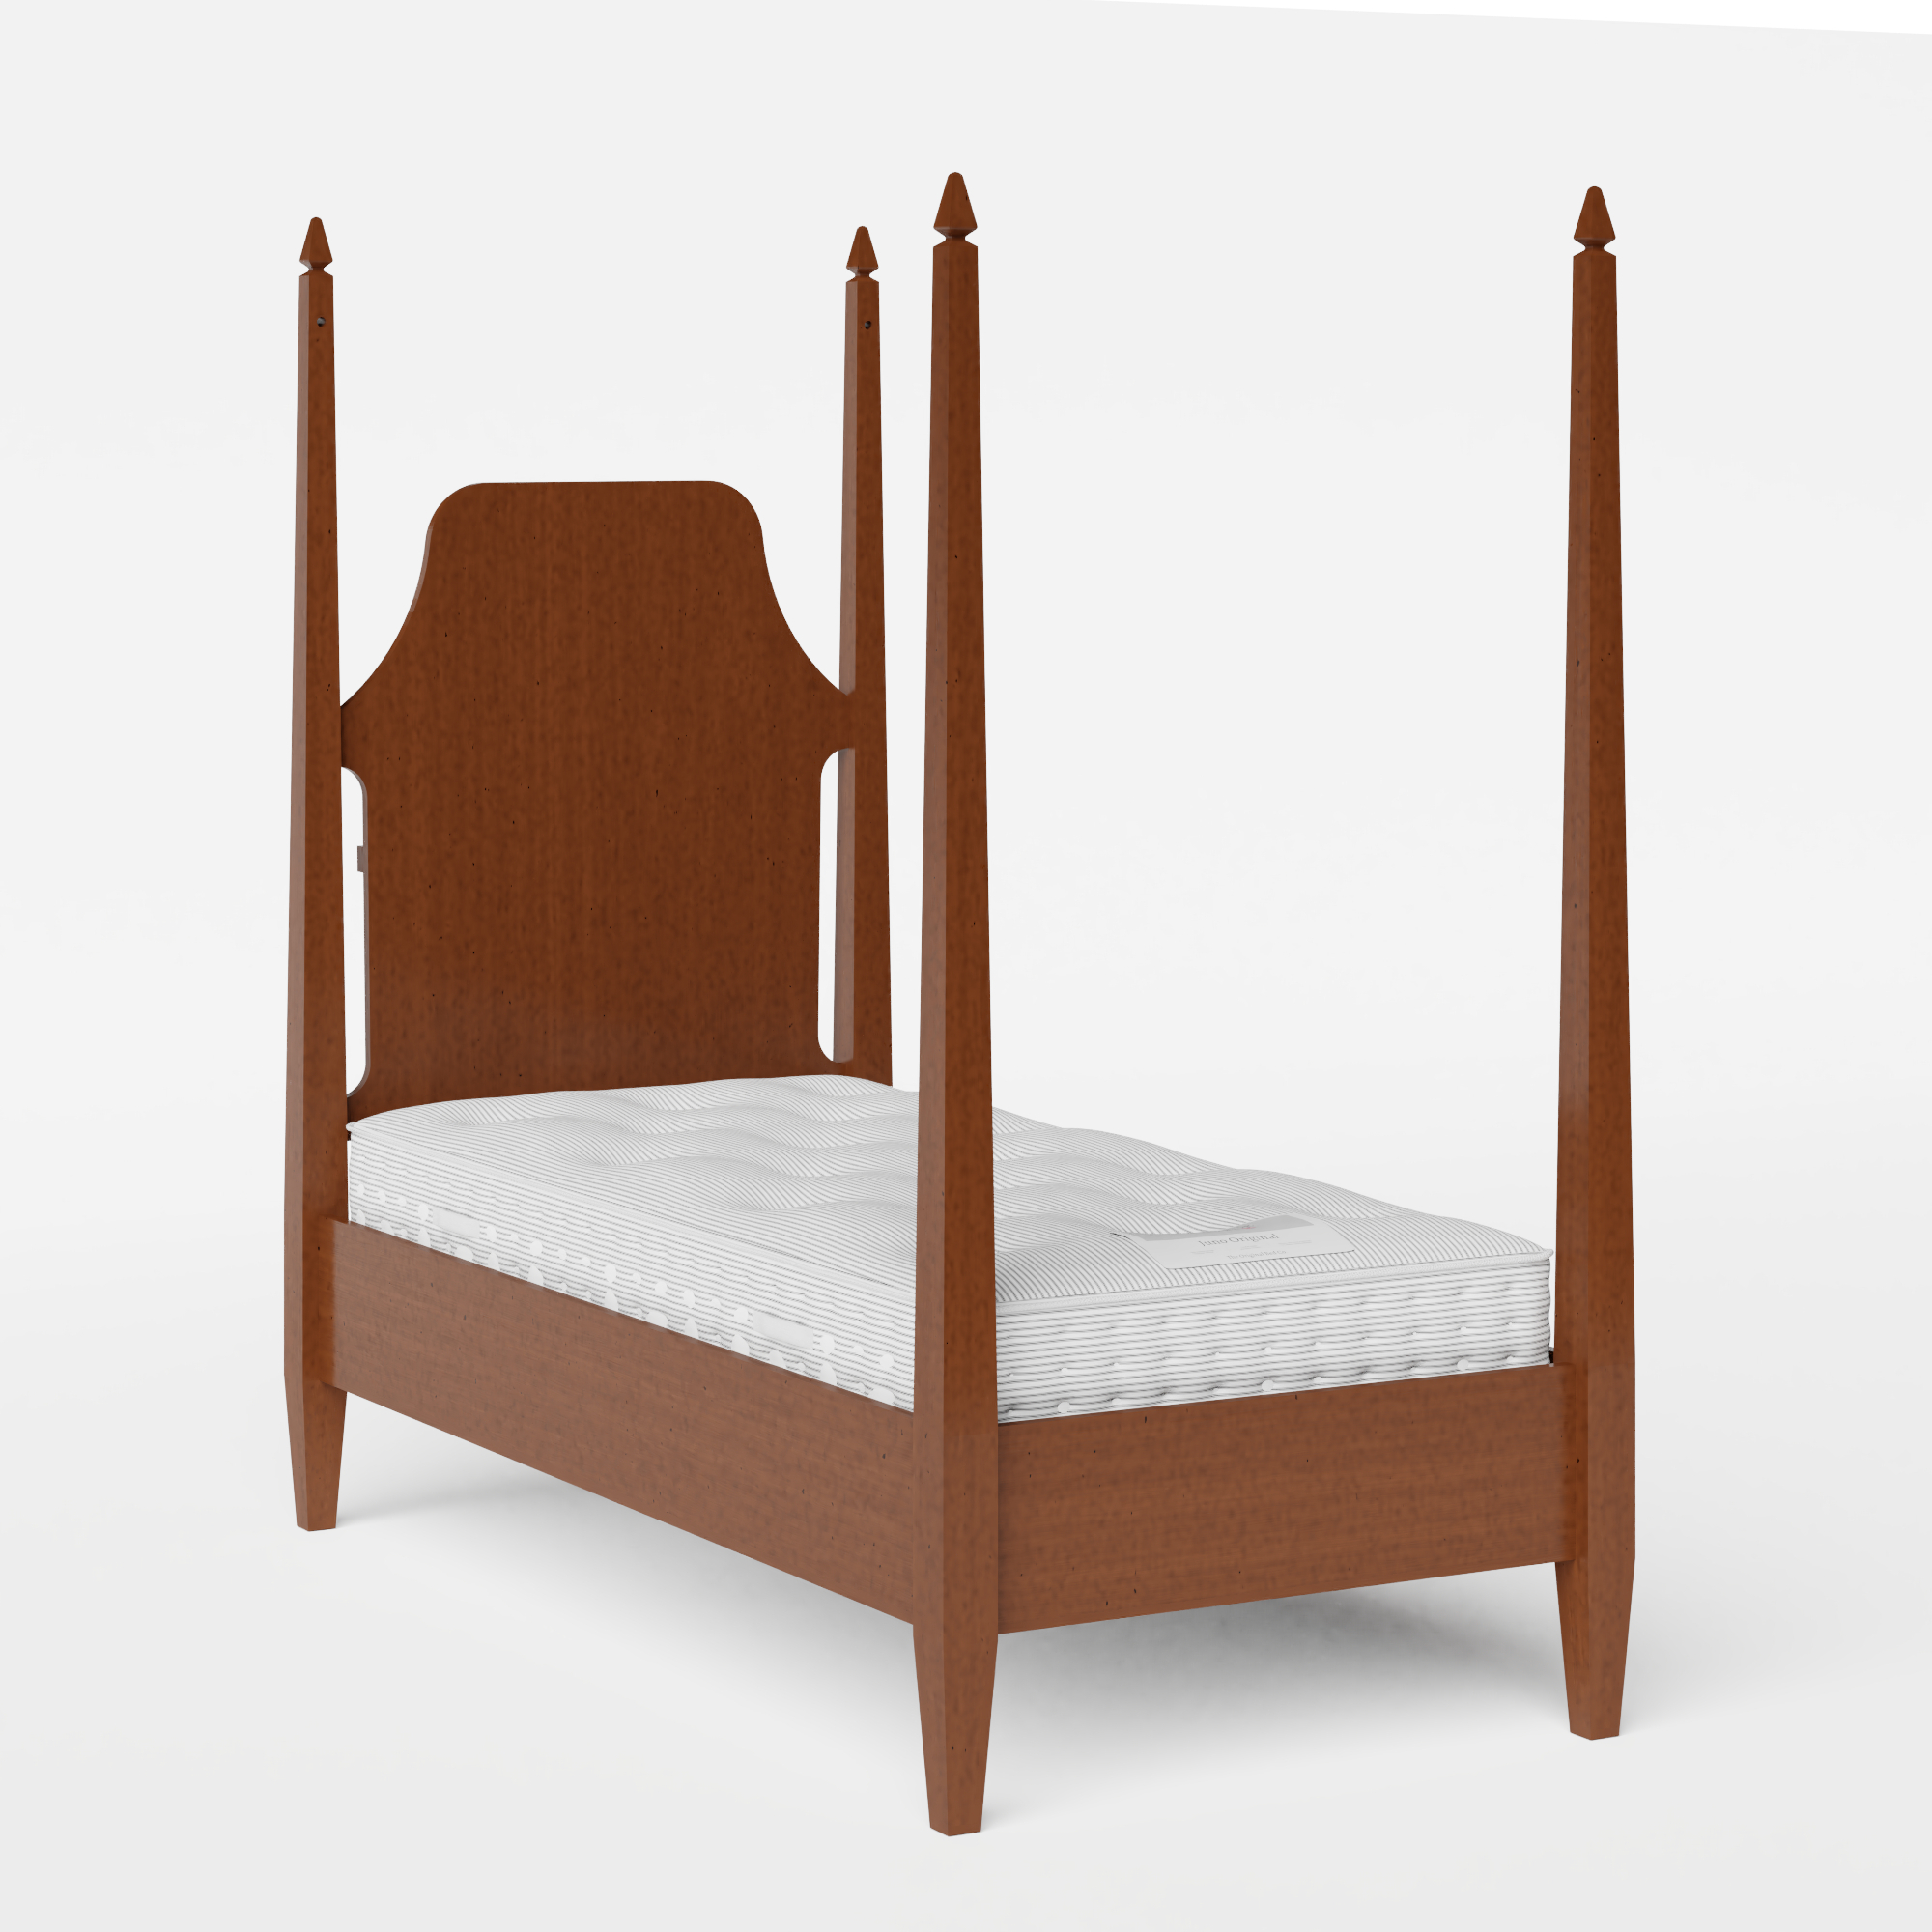 Turner single wood bed in dark cherry with Juno mattress